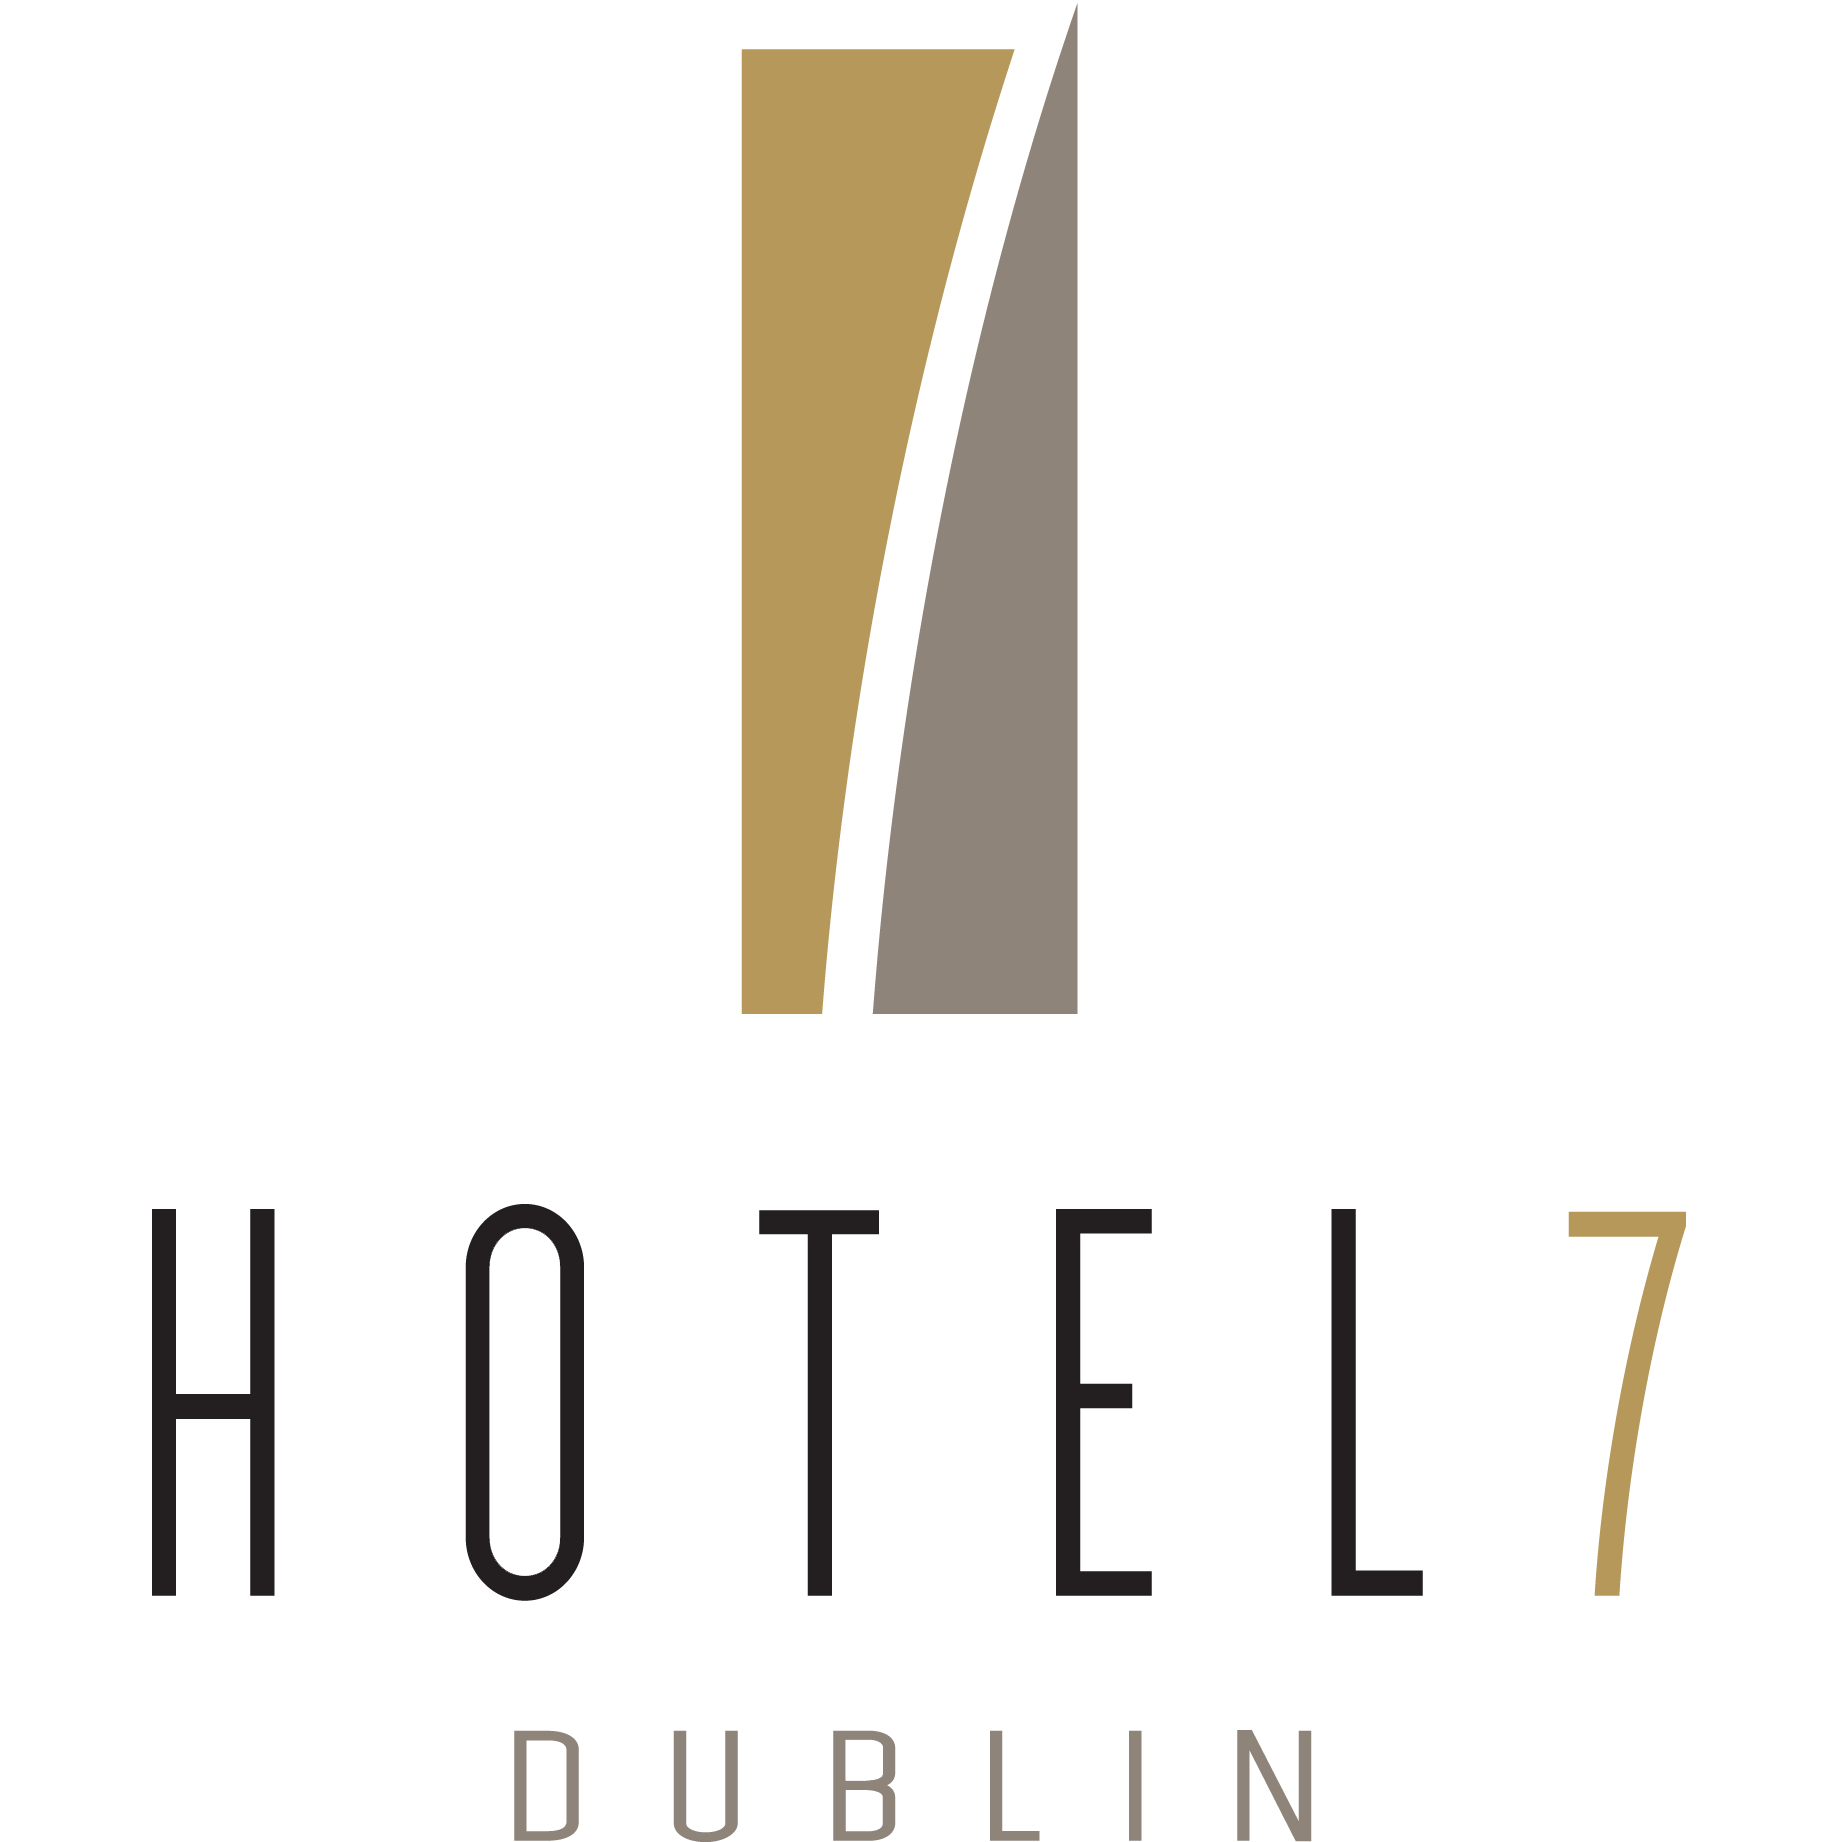 Hotel 7 Dublin - Hotel - Dublin - (01) 873 7777 Ireland | ShowMeLocal.com